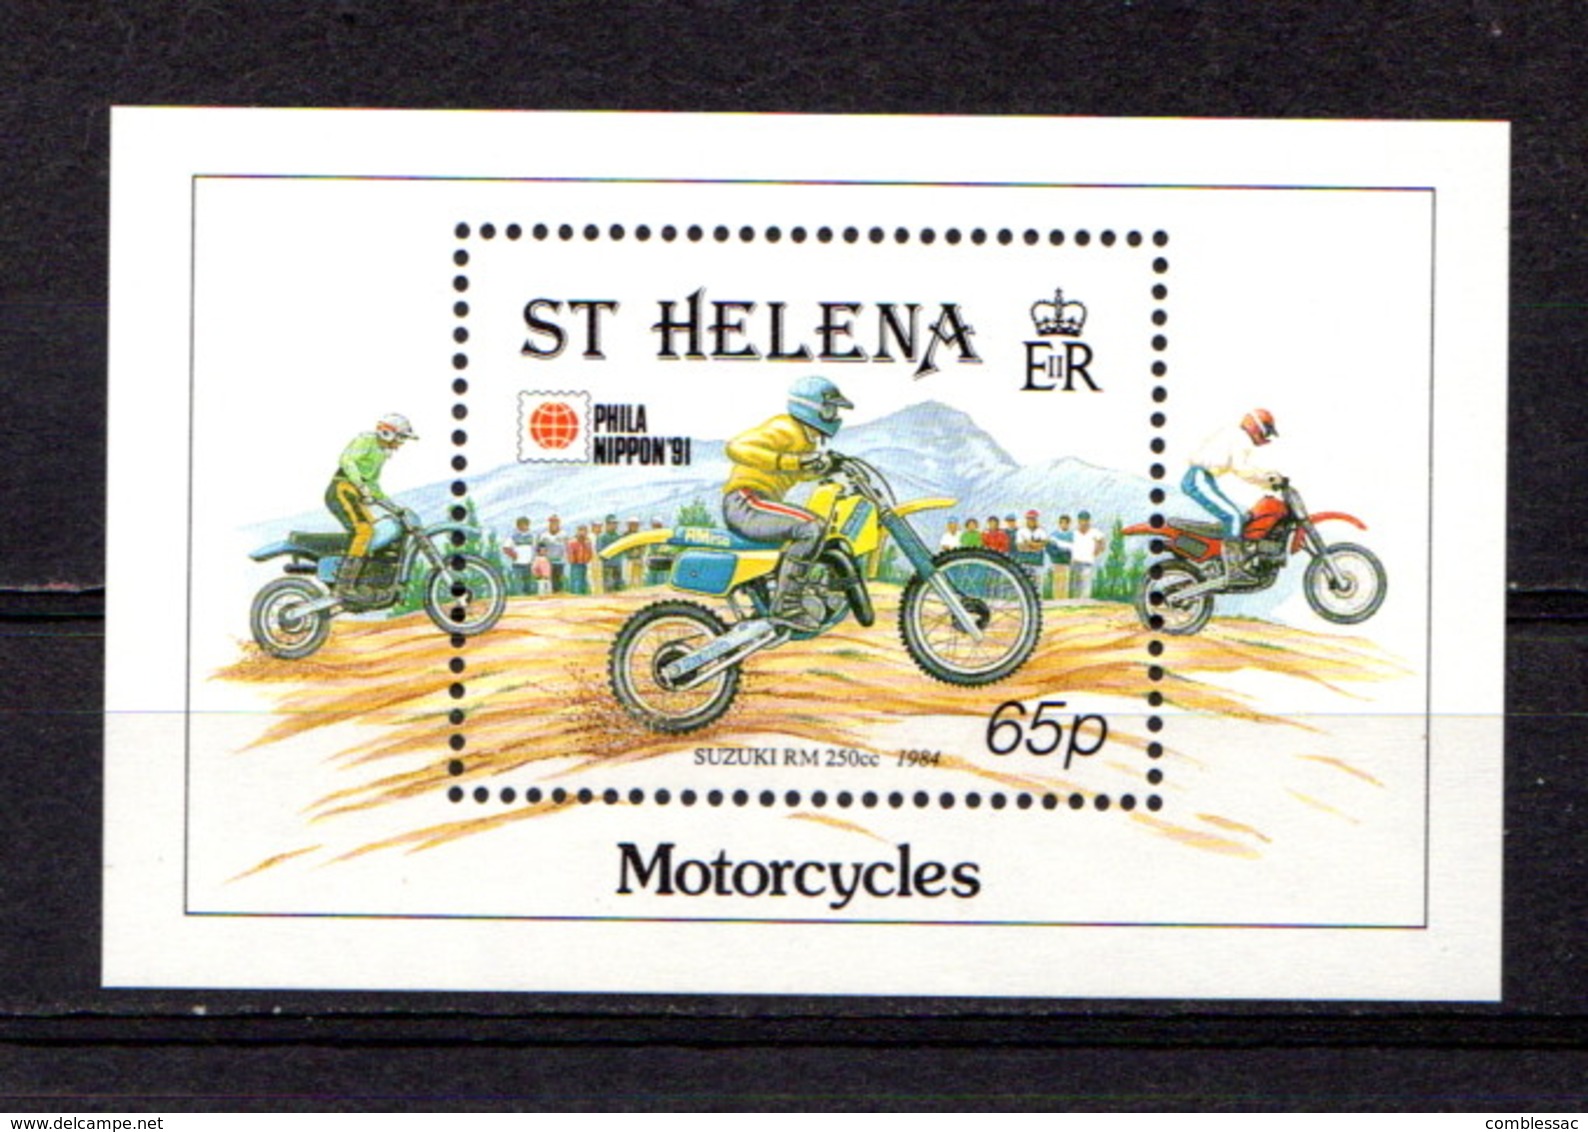 SAINT  HELENA    1991    Philanippon  International  Stamp  Exhibition   Sheetlet    MNH - Saint Helena Island